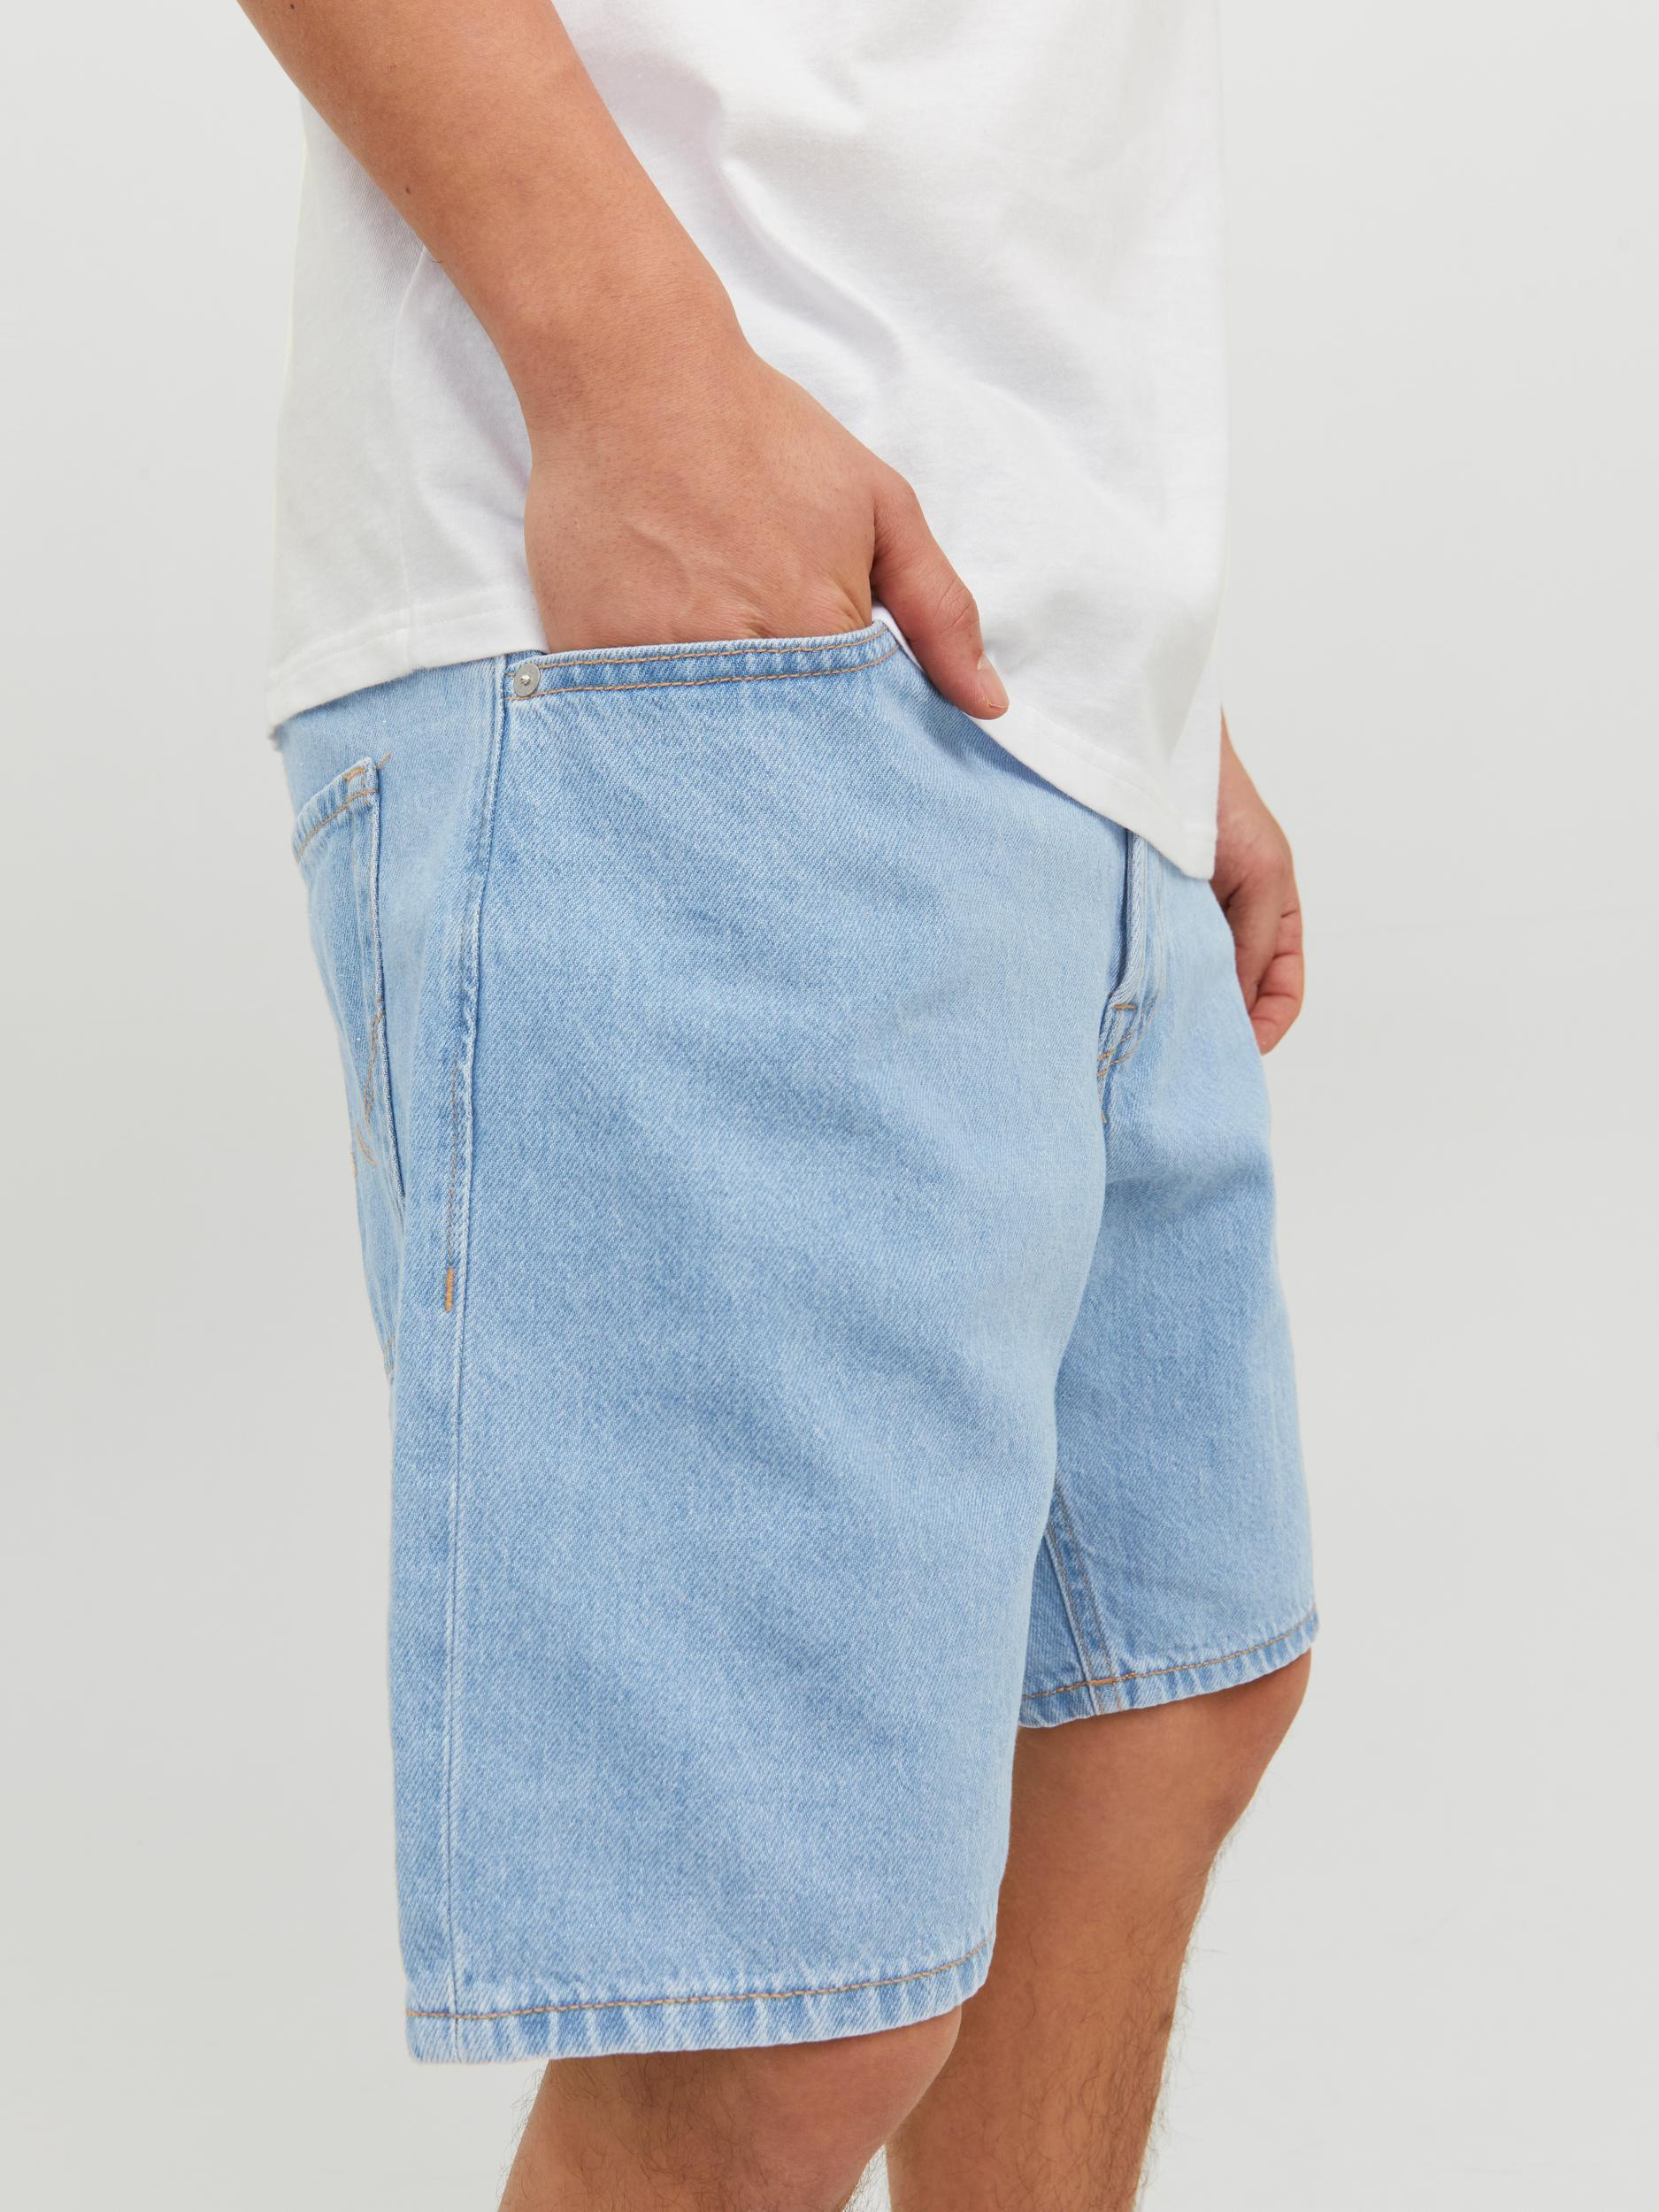 Jack & Jones - Bermuda cinque tasche in jeans, Denim, large image number 7